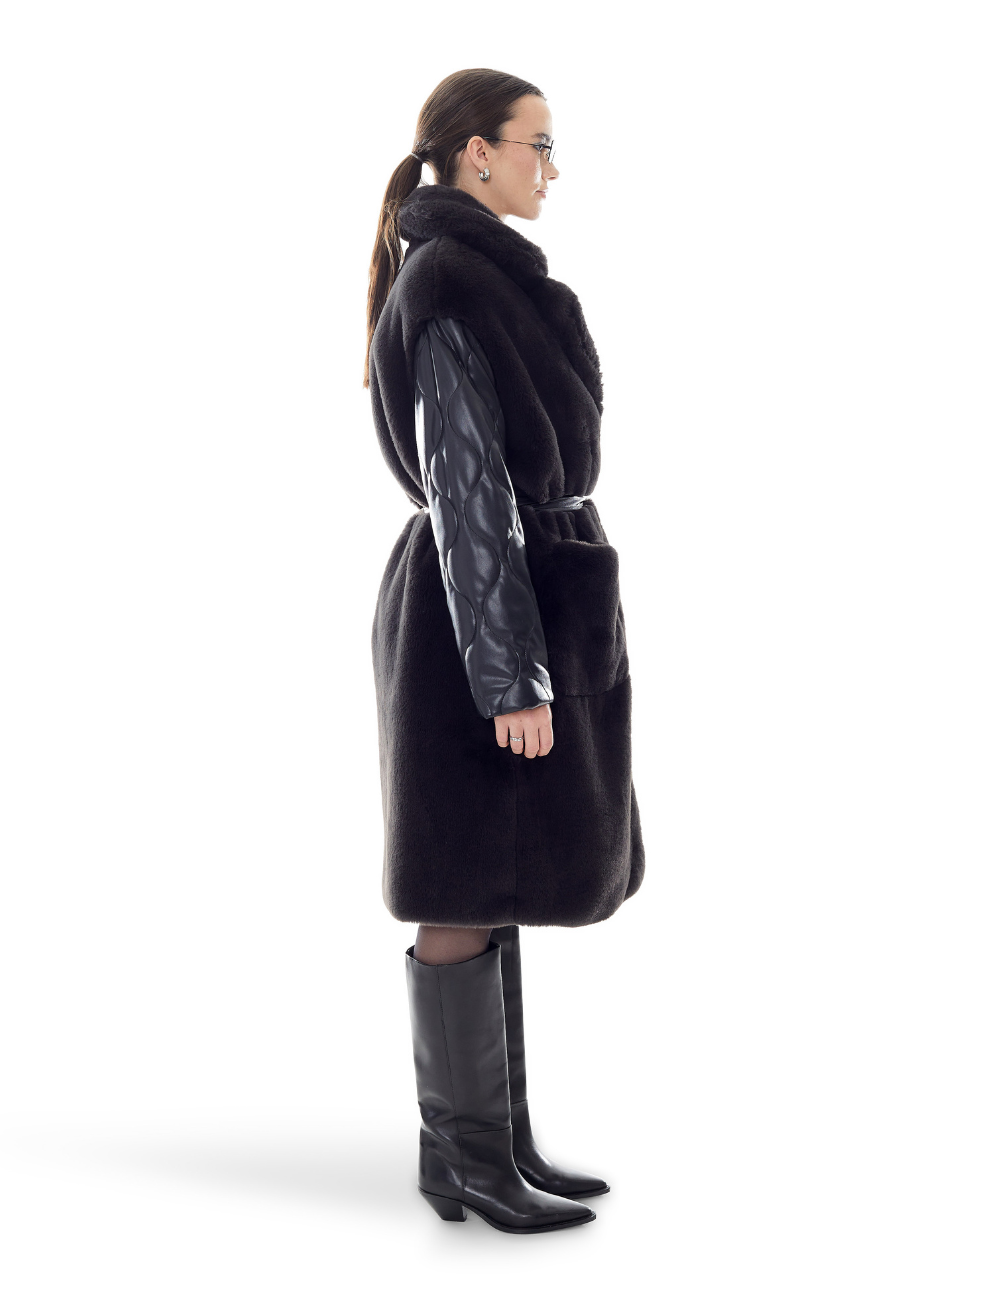 Sadie Black 3 Seasons Animal Free Leather Fur Jacket Ethical Zero Waste